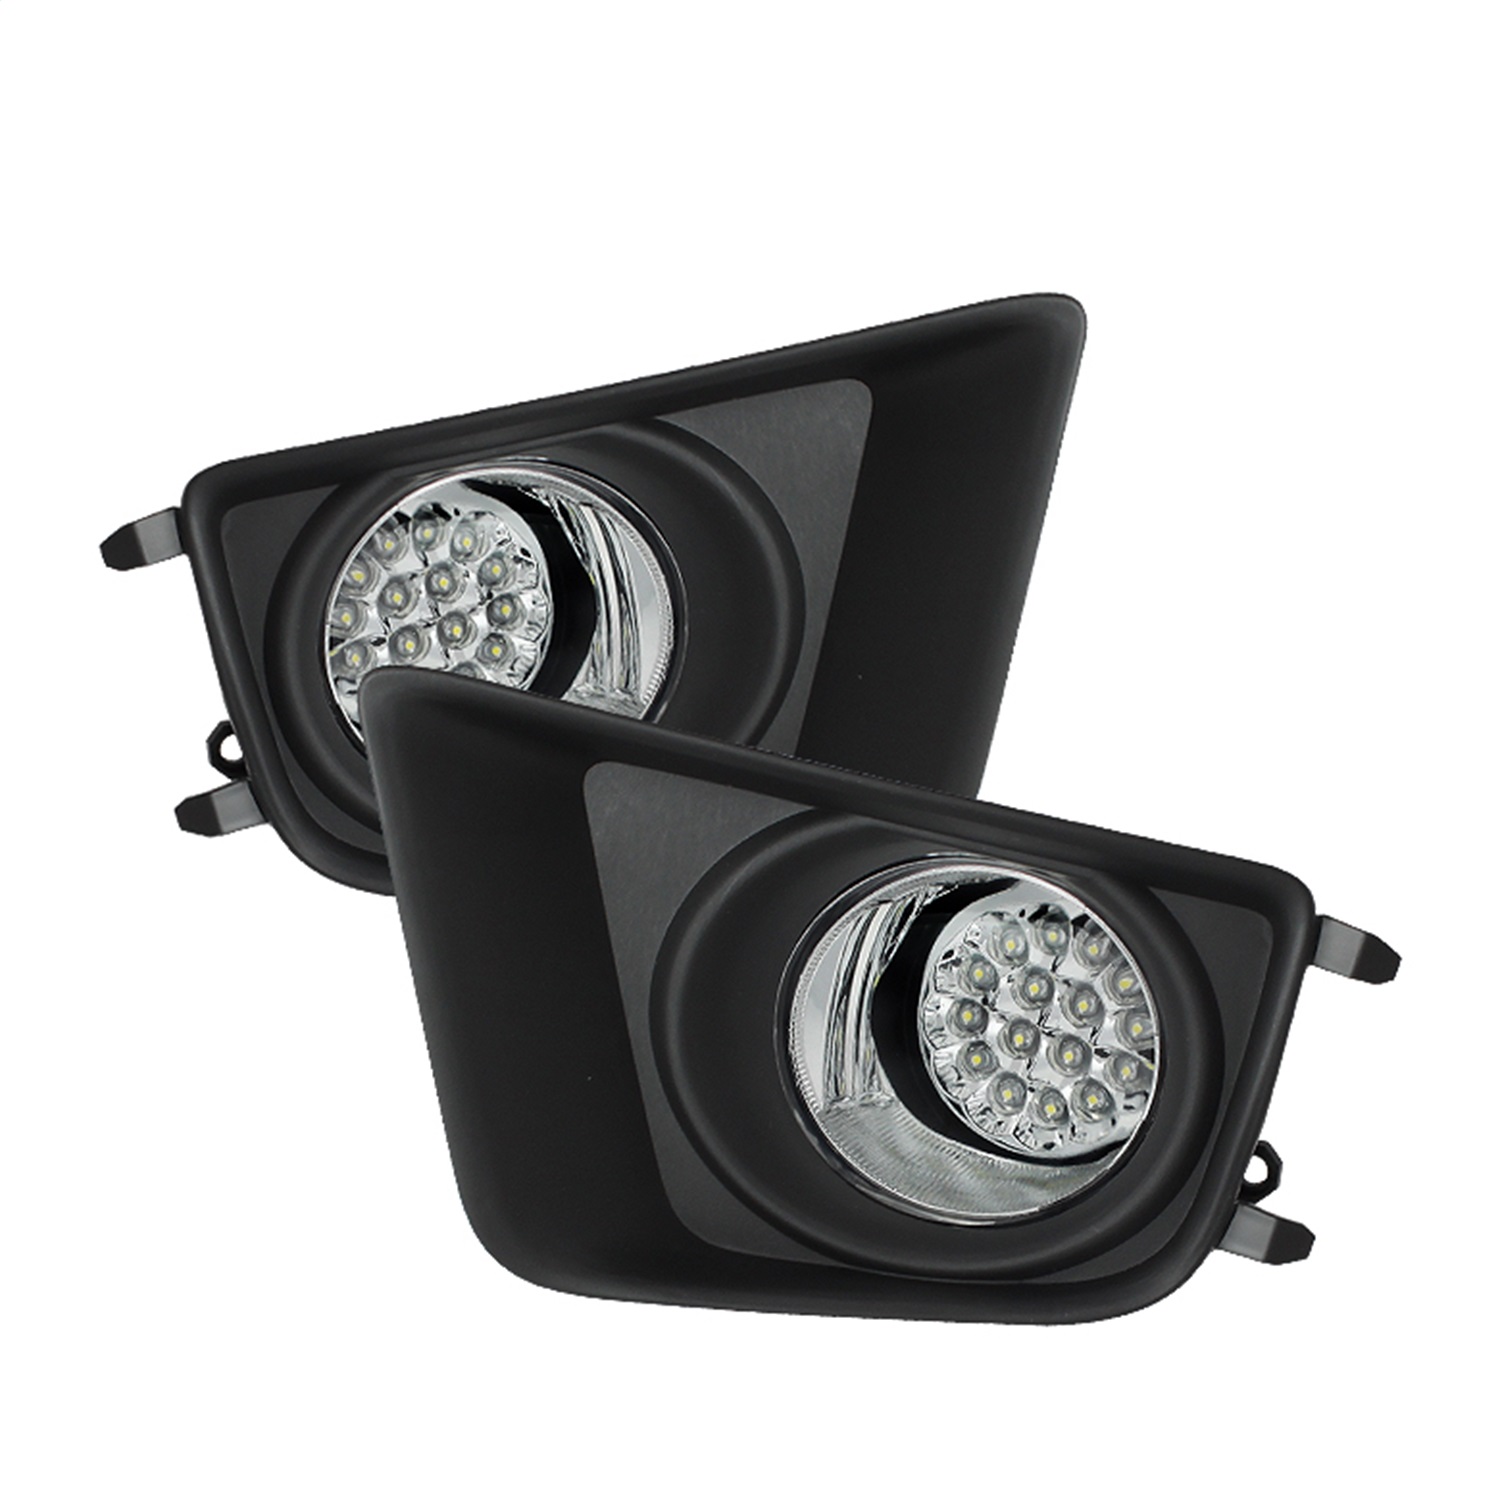 Spyder Auto 5075154 LED Fog Lights Fits 12-15 Tacoma